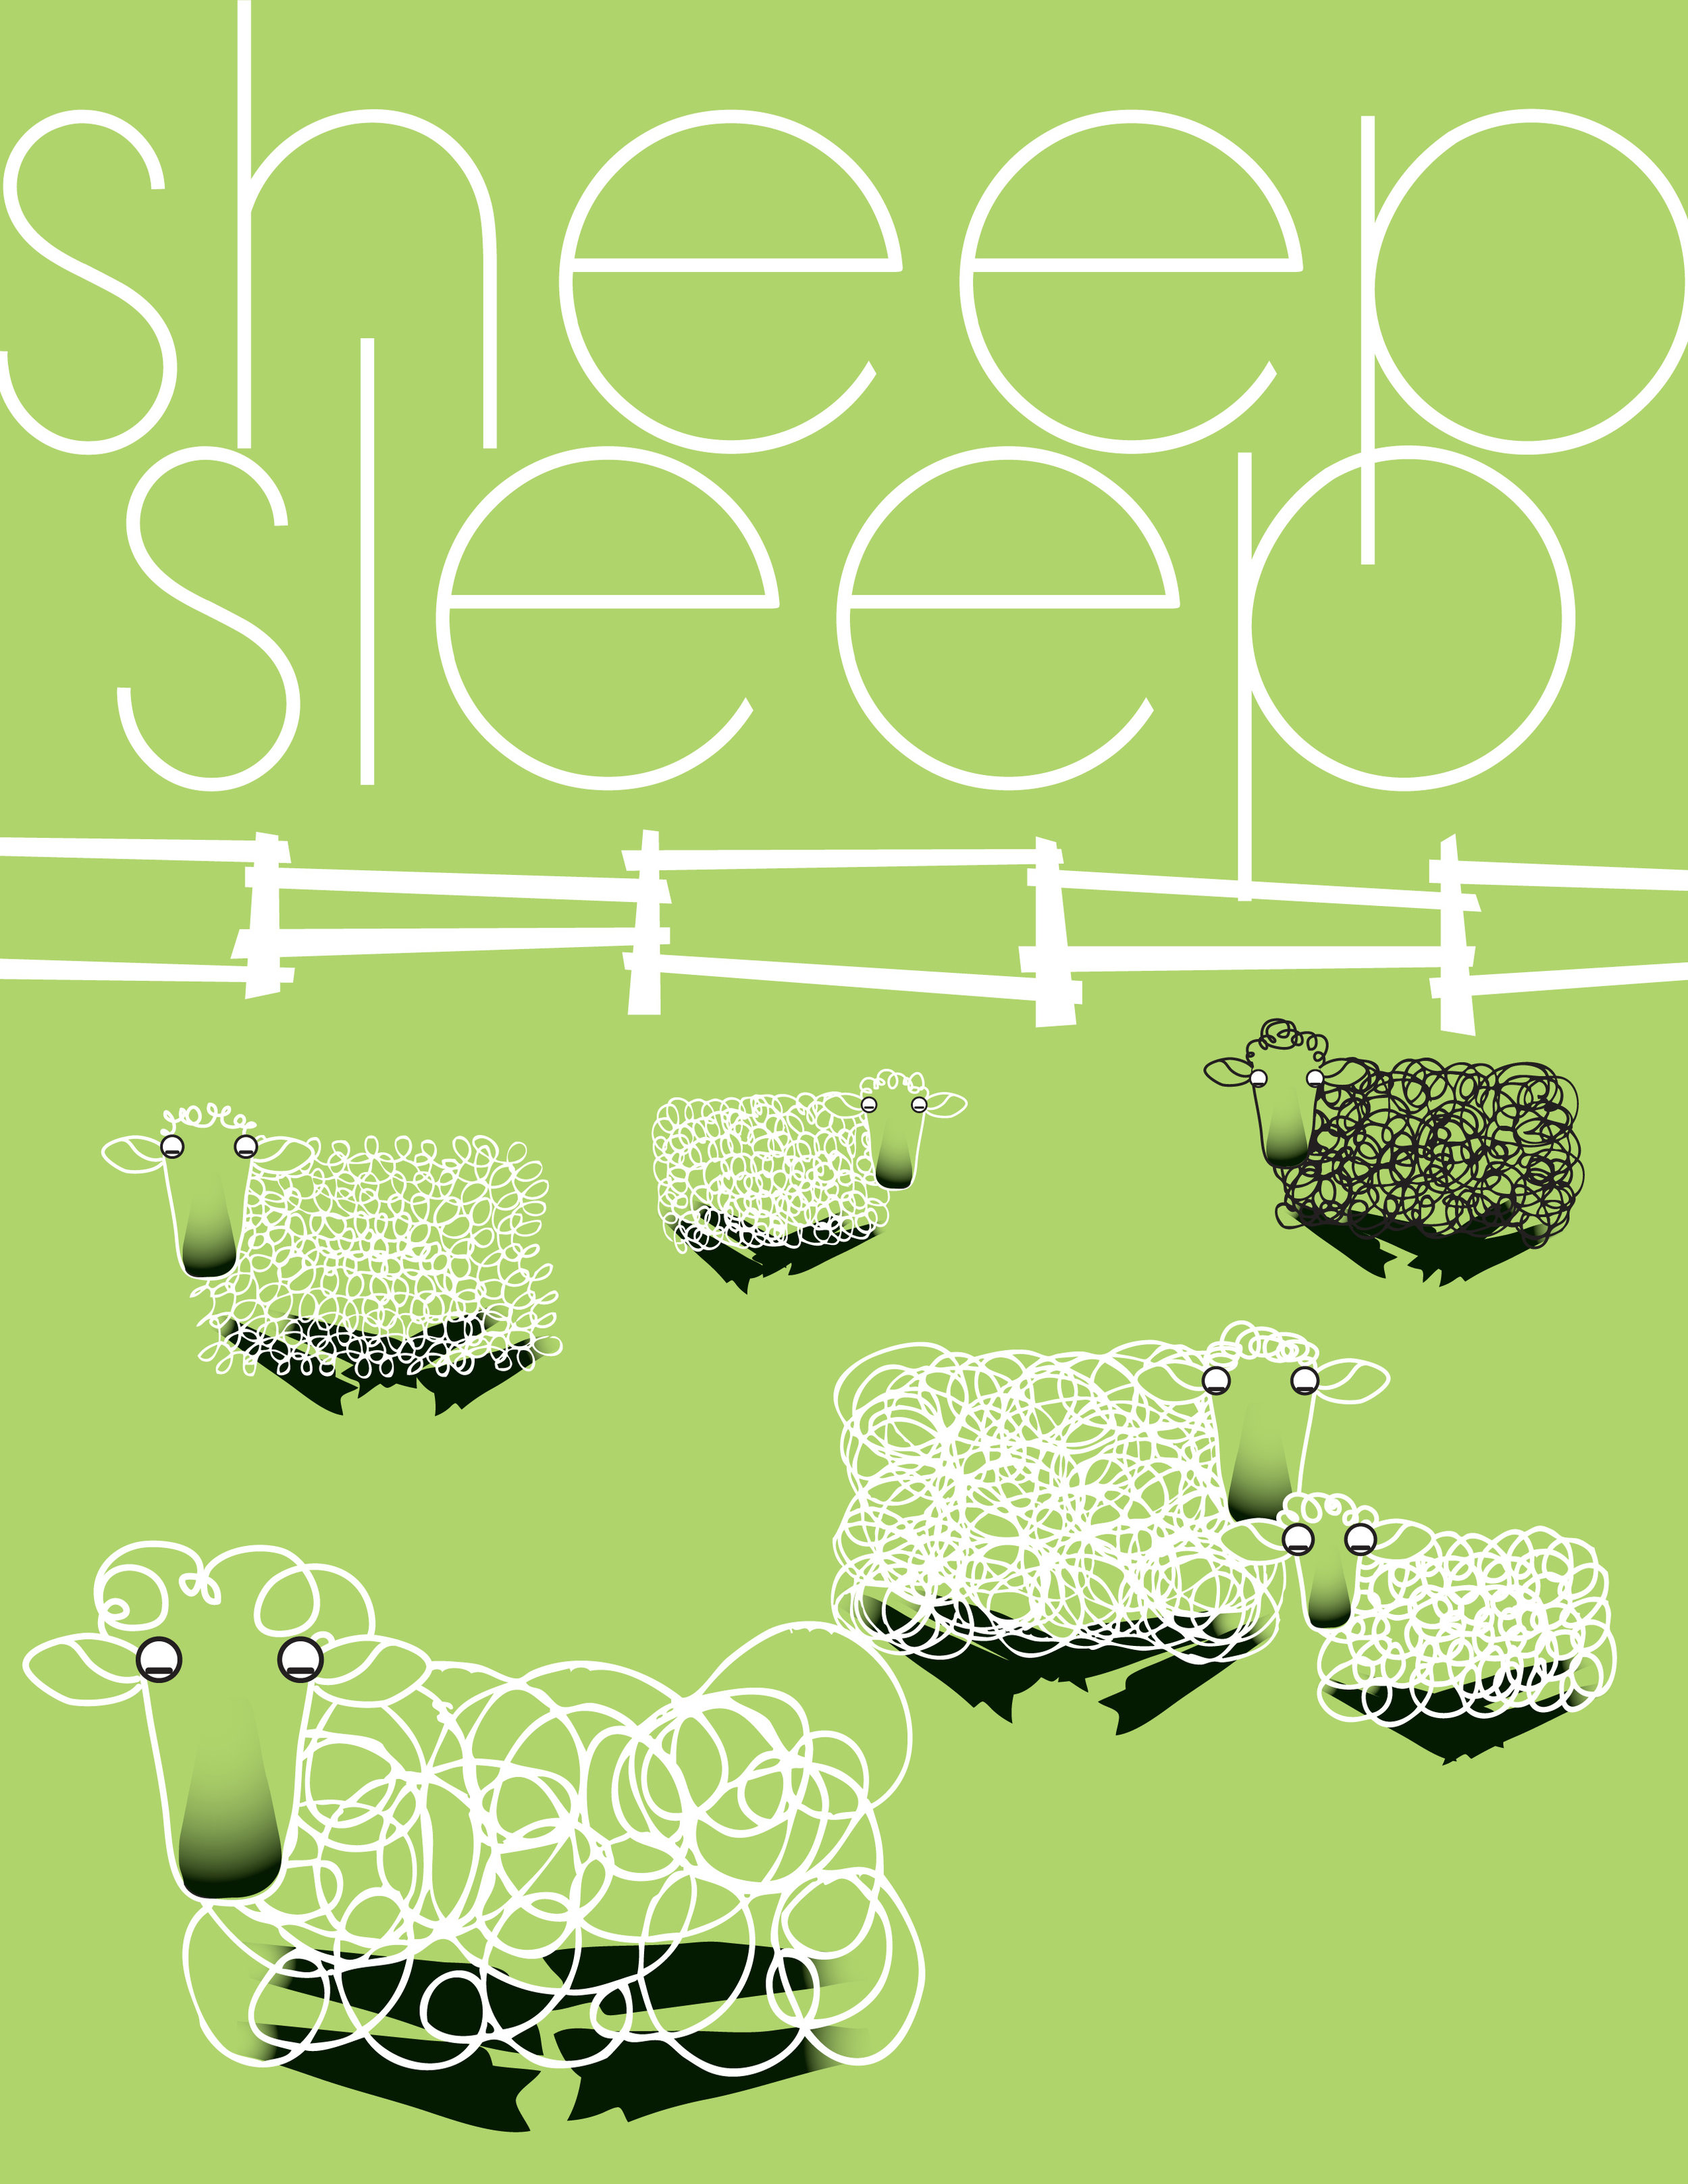 Sheep Sleep Book 2-14.jpg